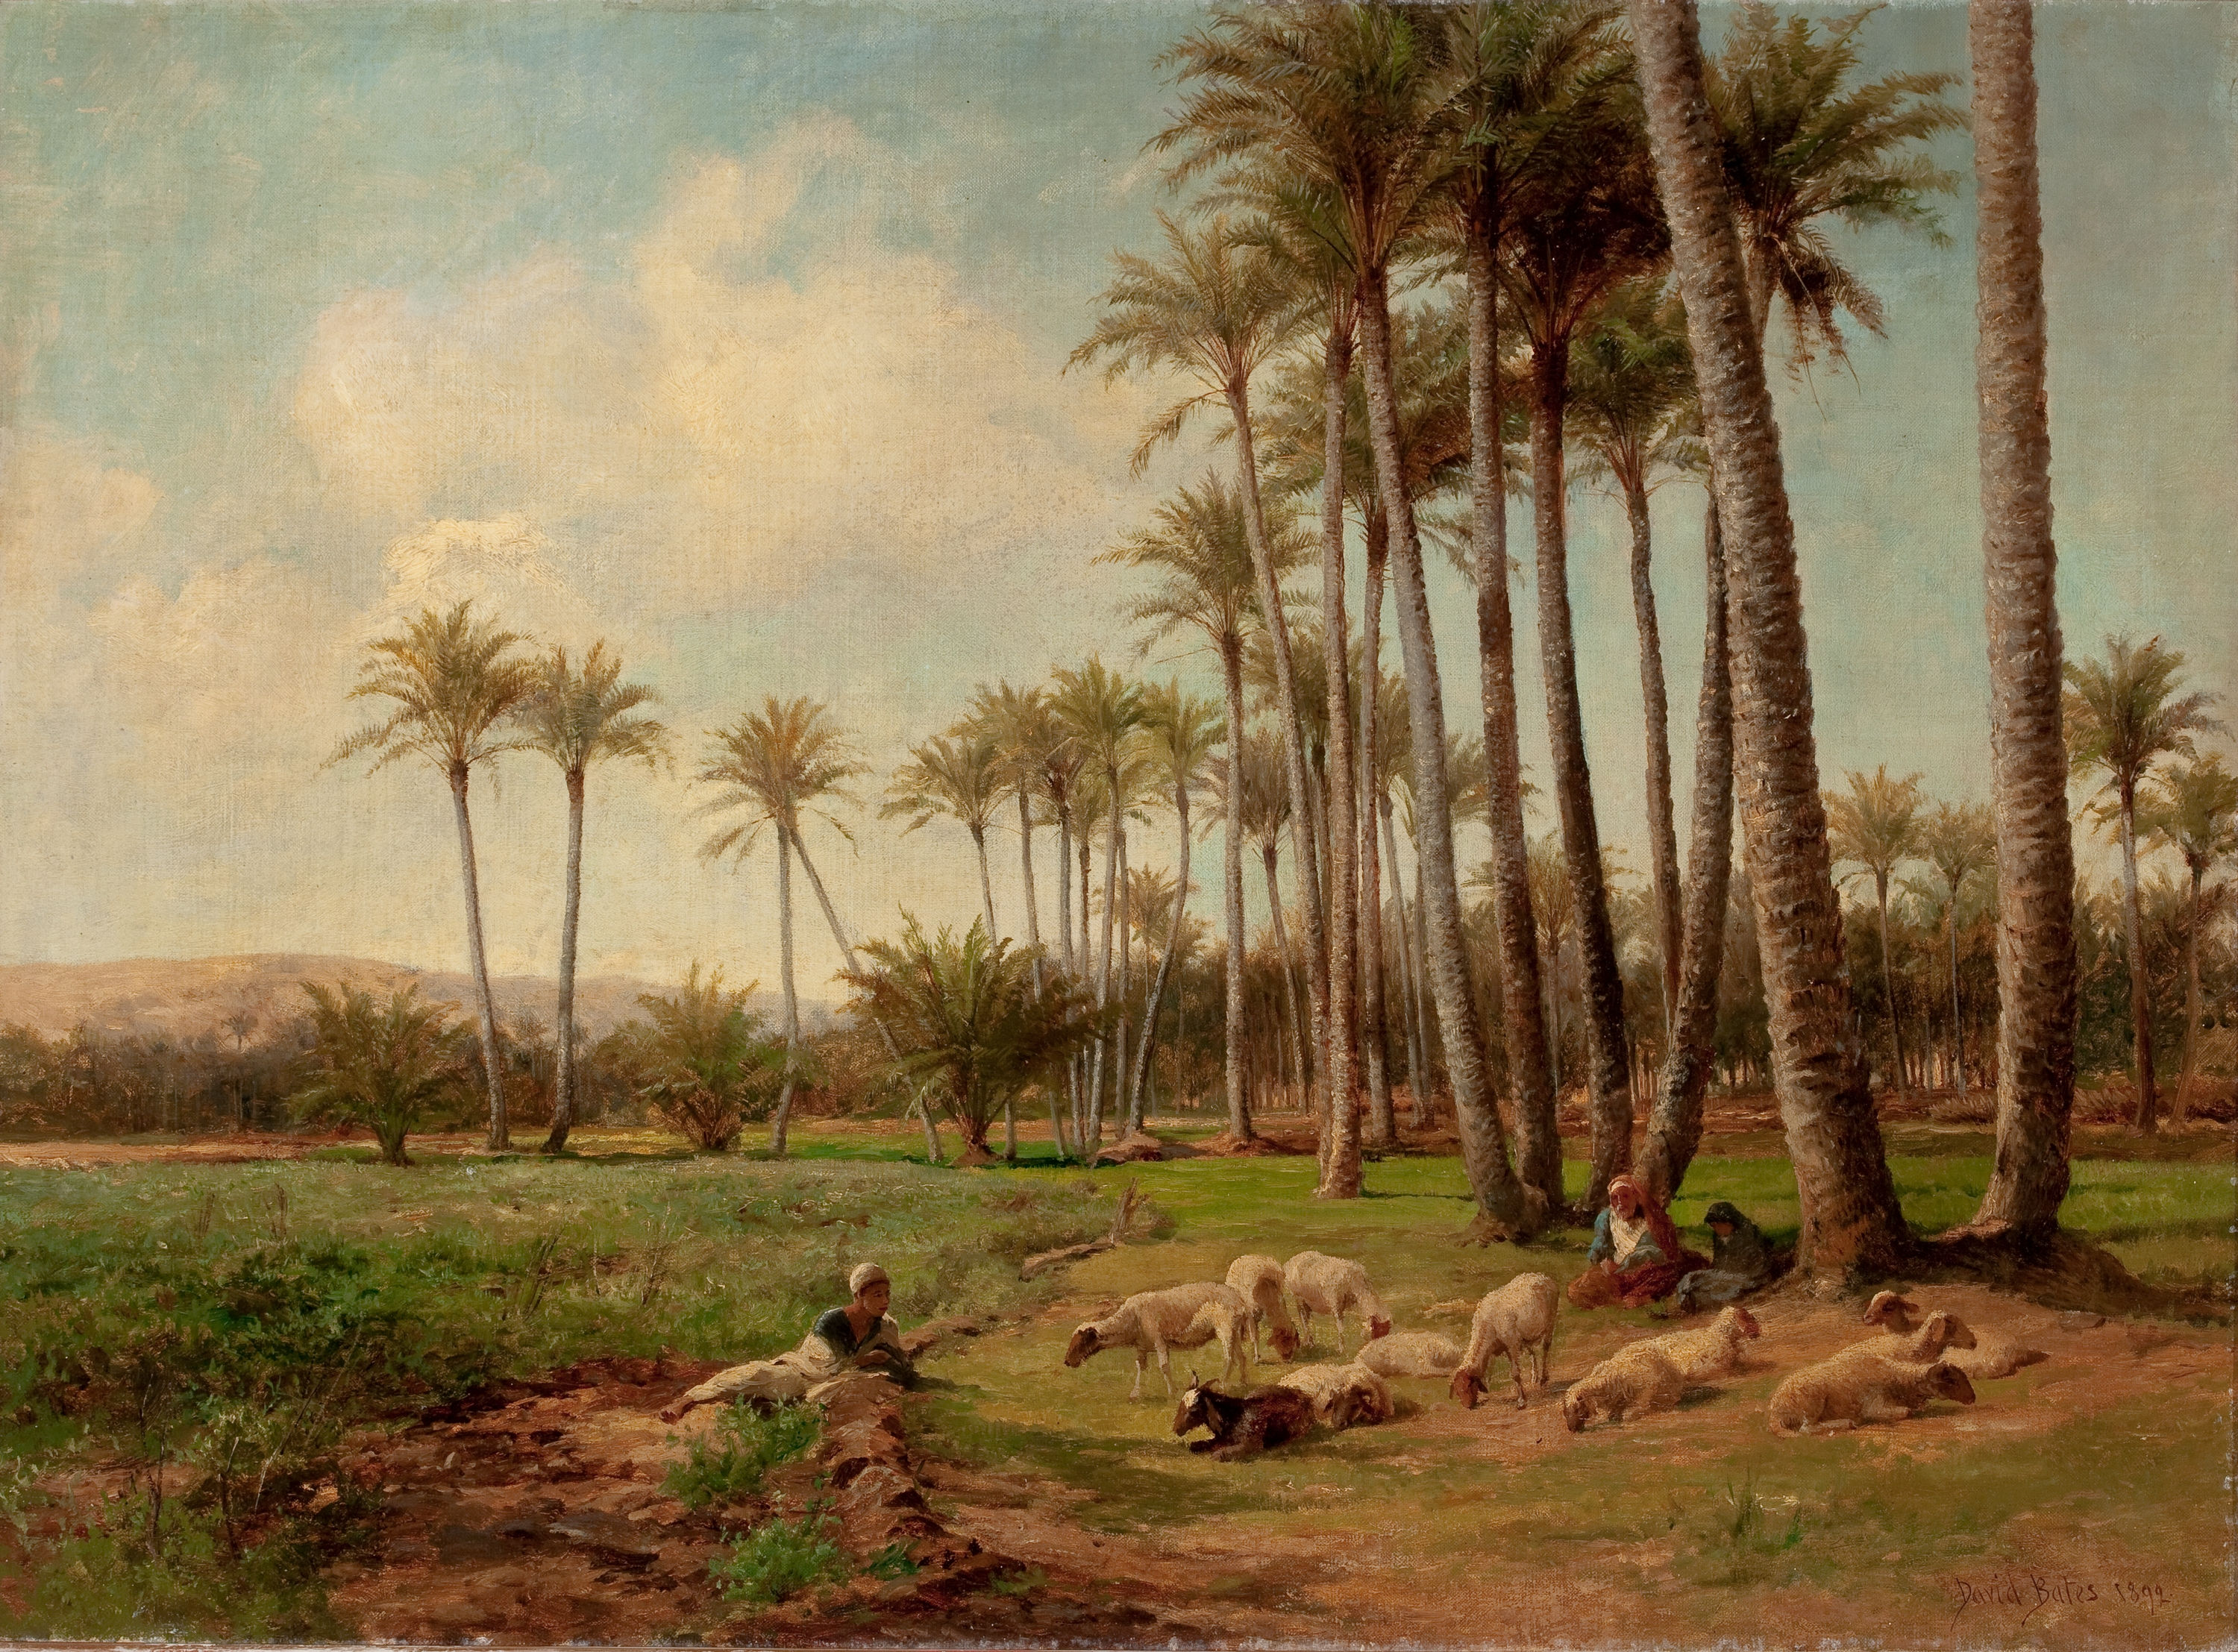 An Oasis in the Desert-David Bates-1899